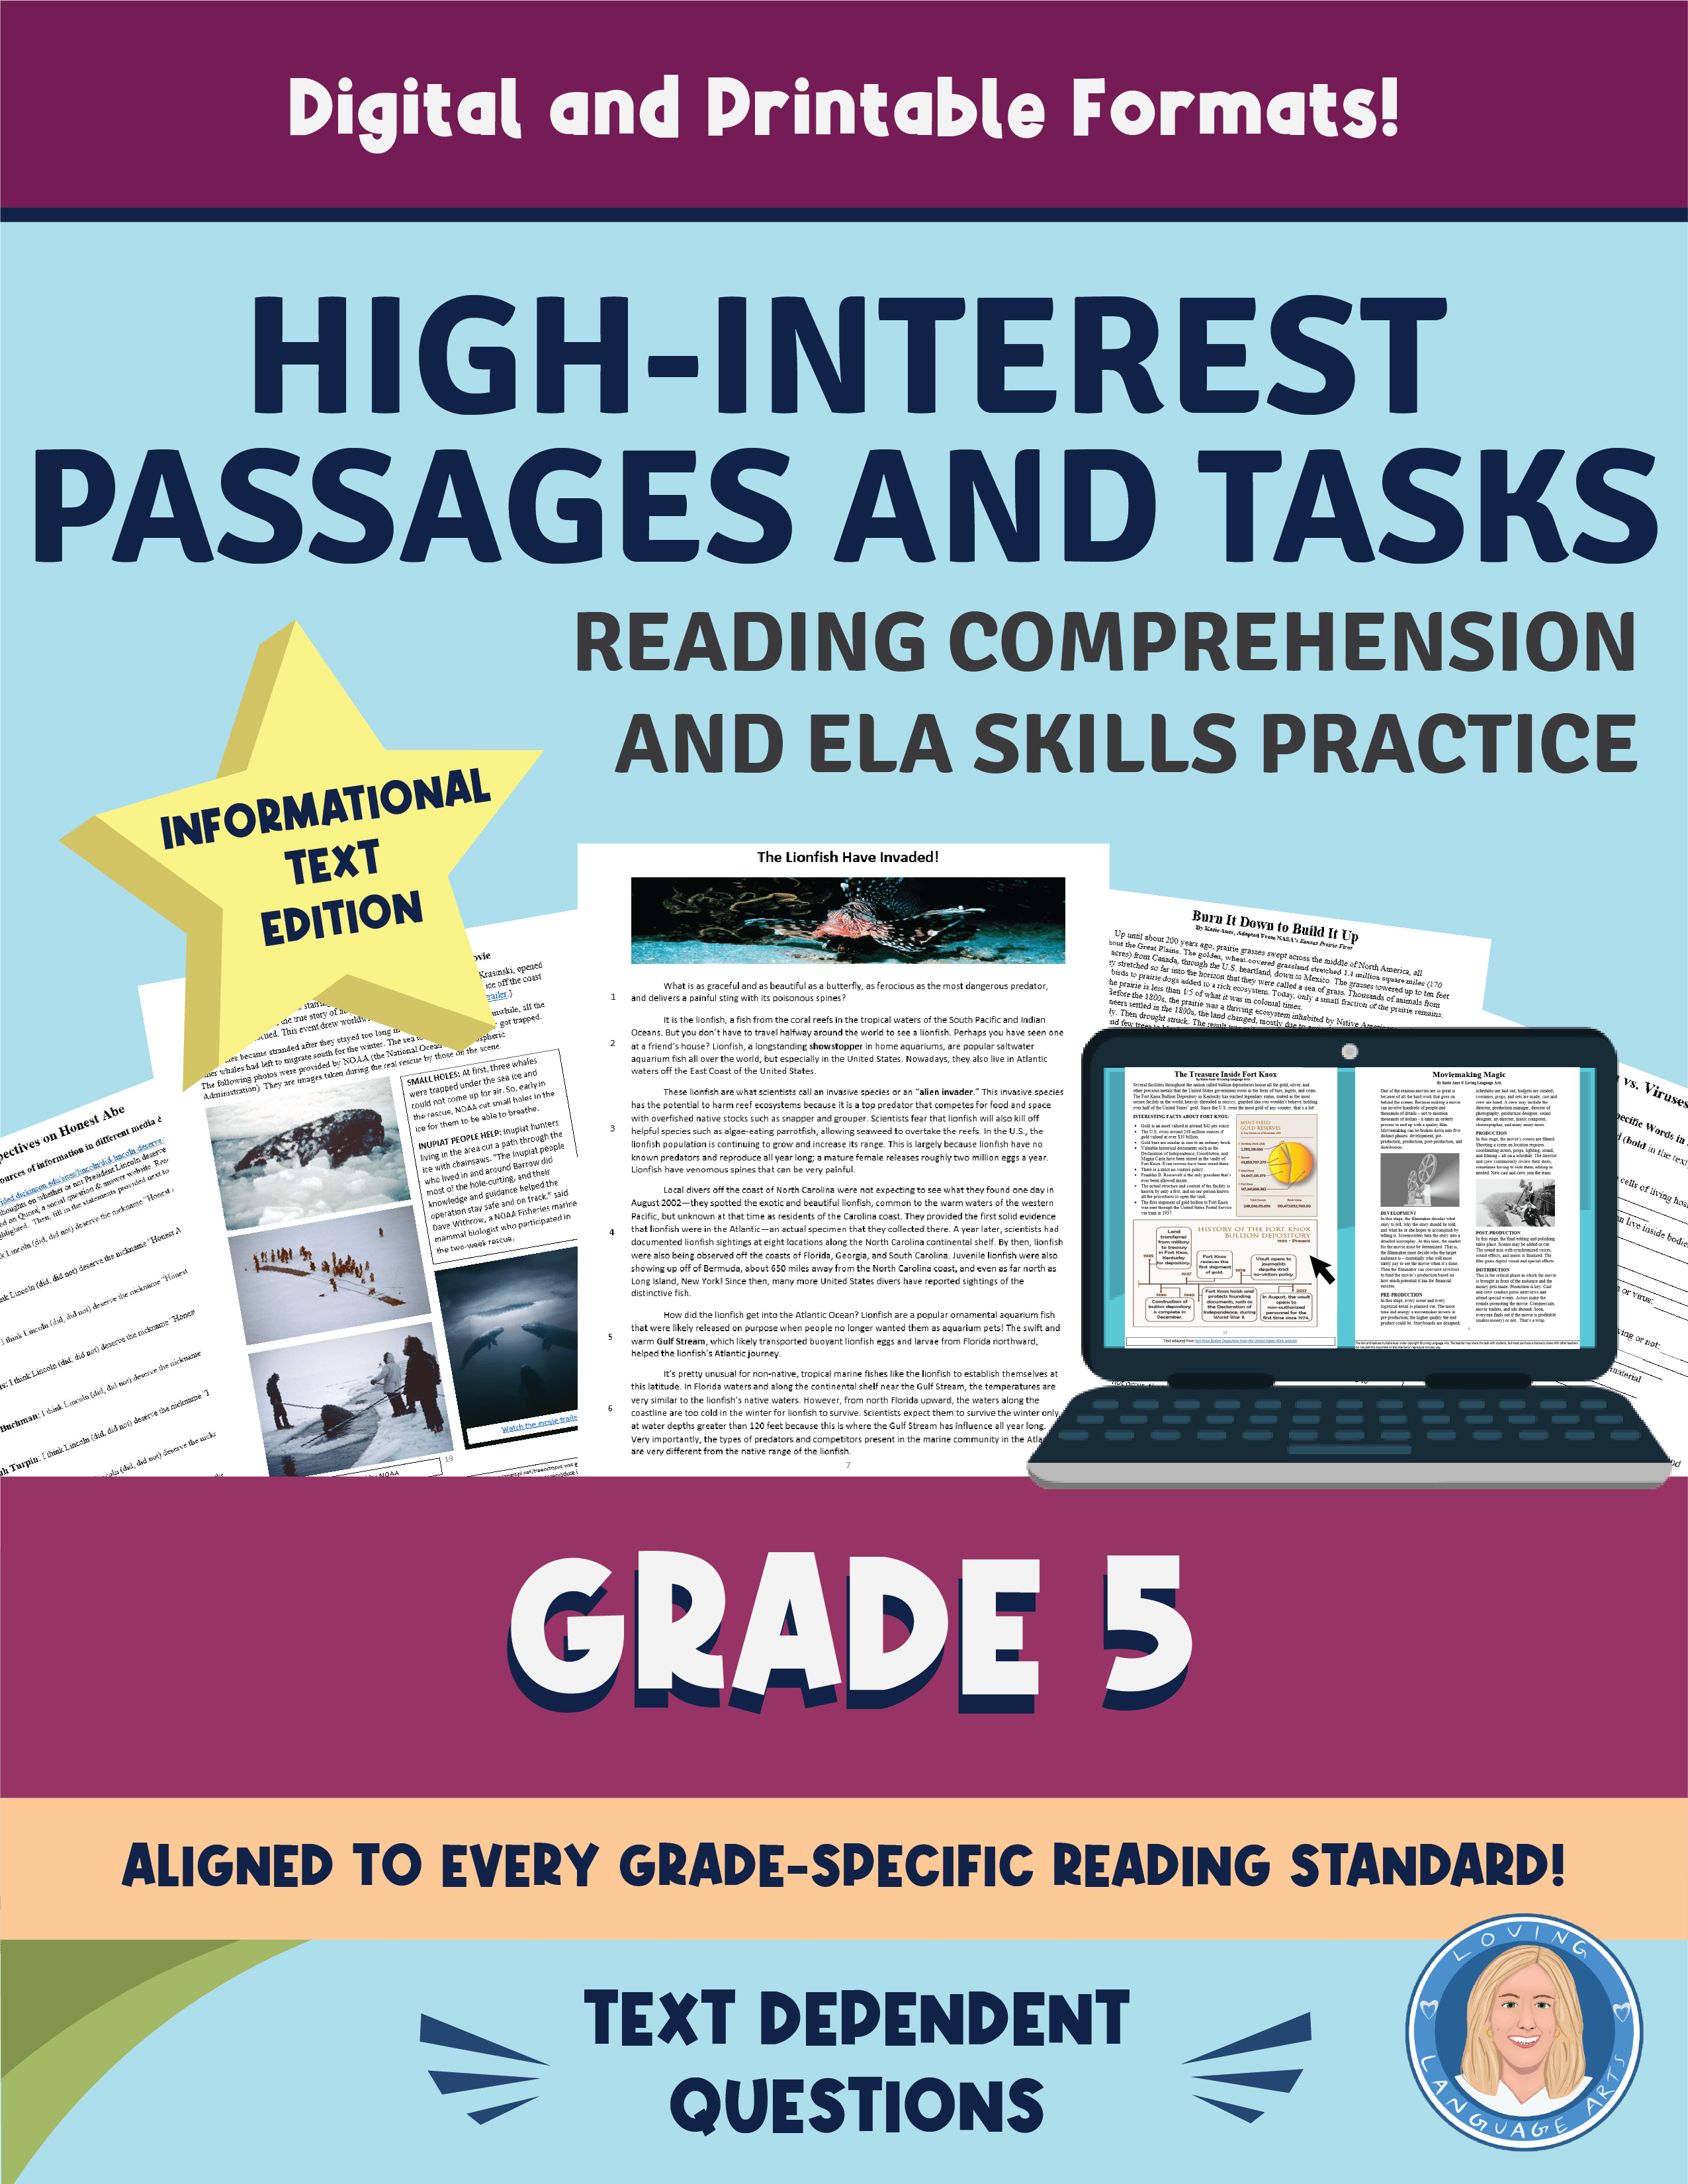 5th grade language arts workbook - High-interest passages and tasks.